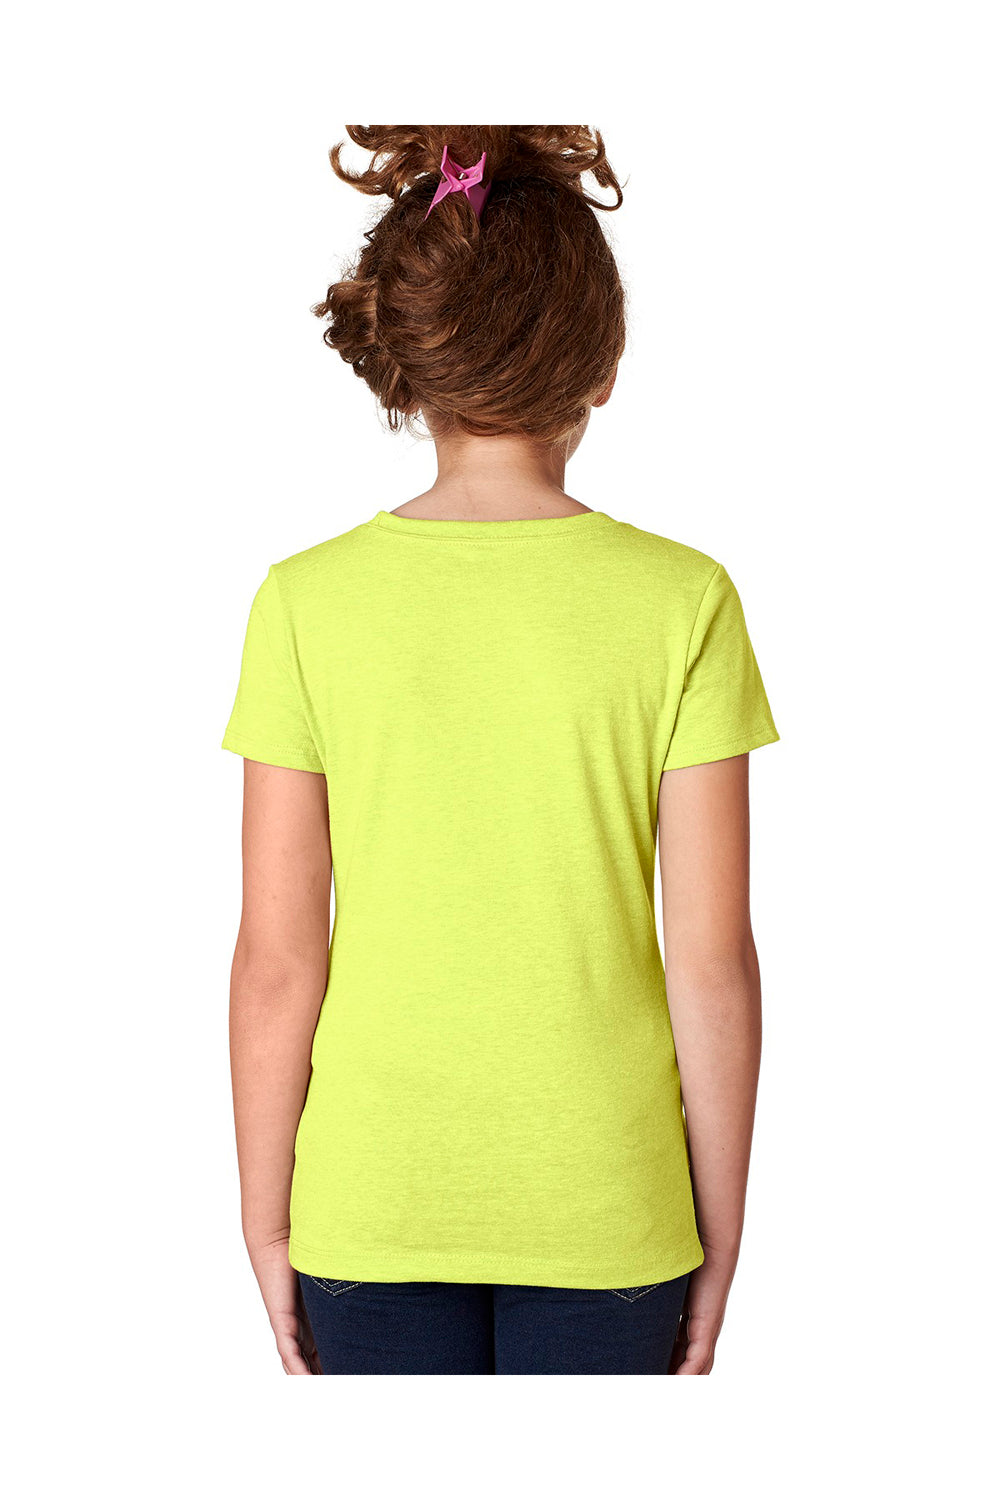 Next Level 3712 Youth Princess CVC Jersey Short Sleeve Crewneck T-Shirt Neon Yellow Back